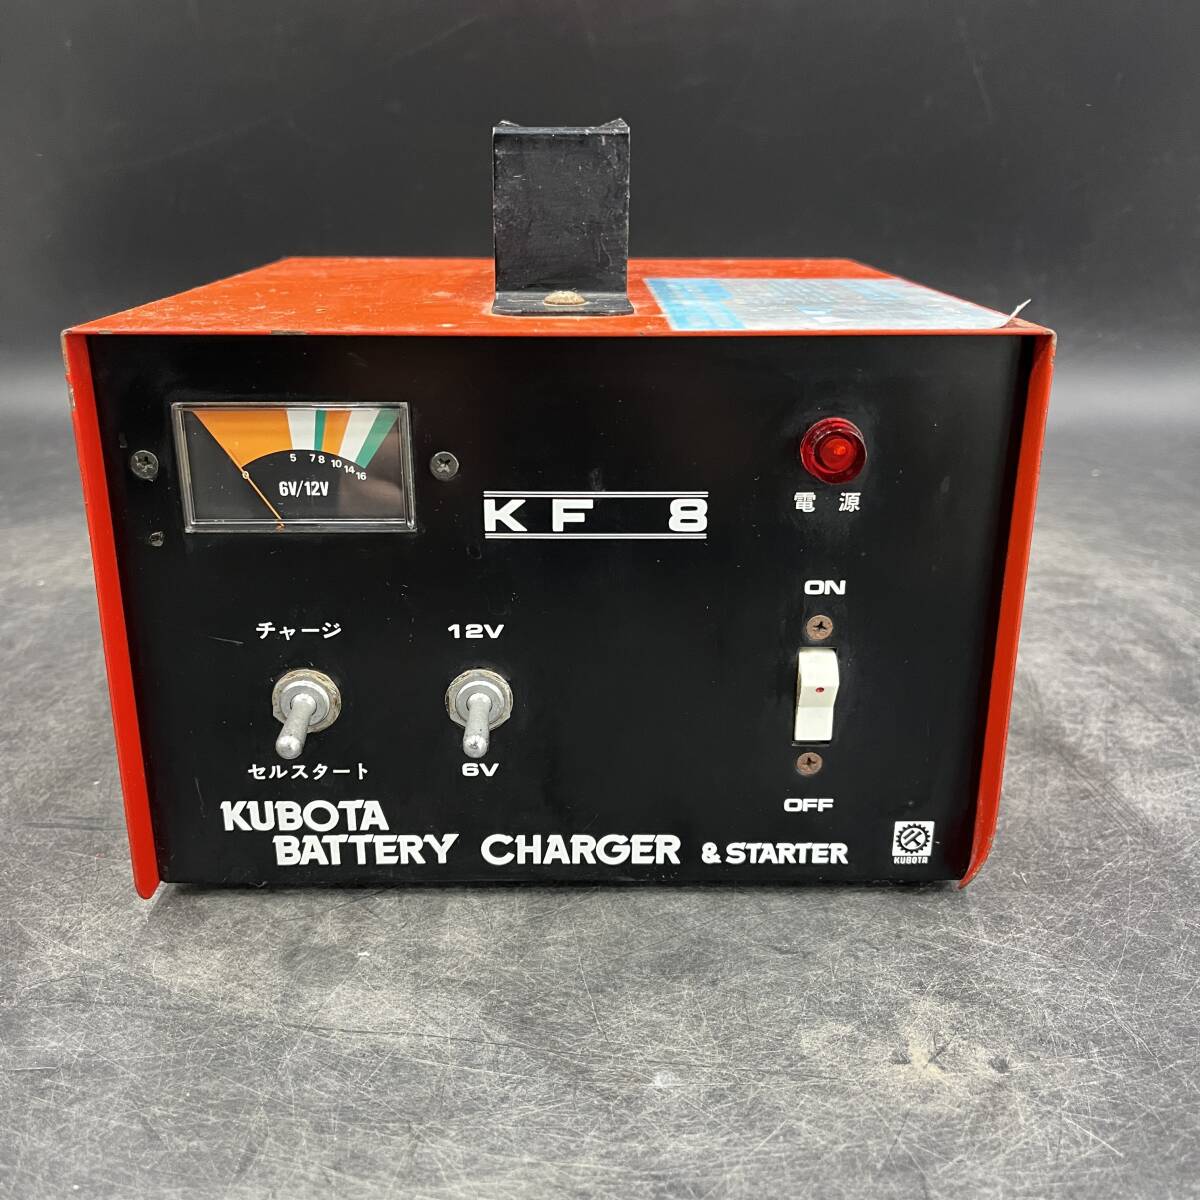  Kubota /KUBOTA battery charger charger [KF 8]